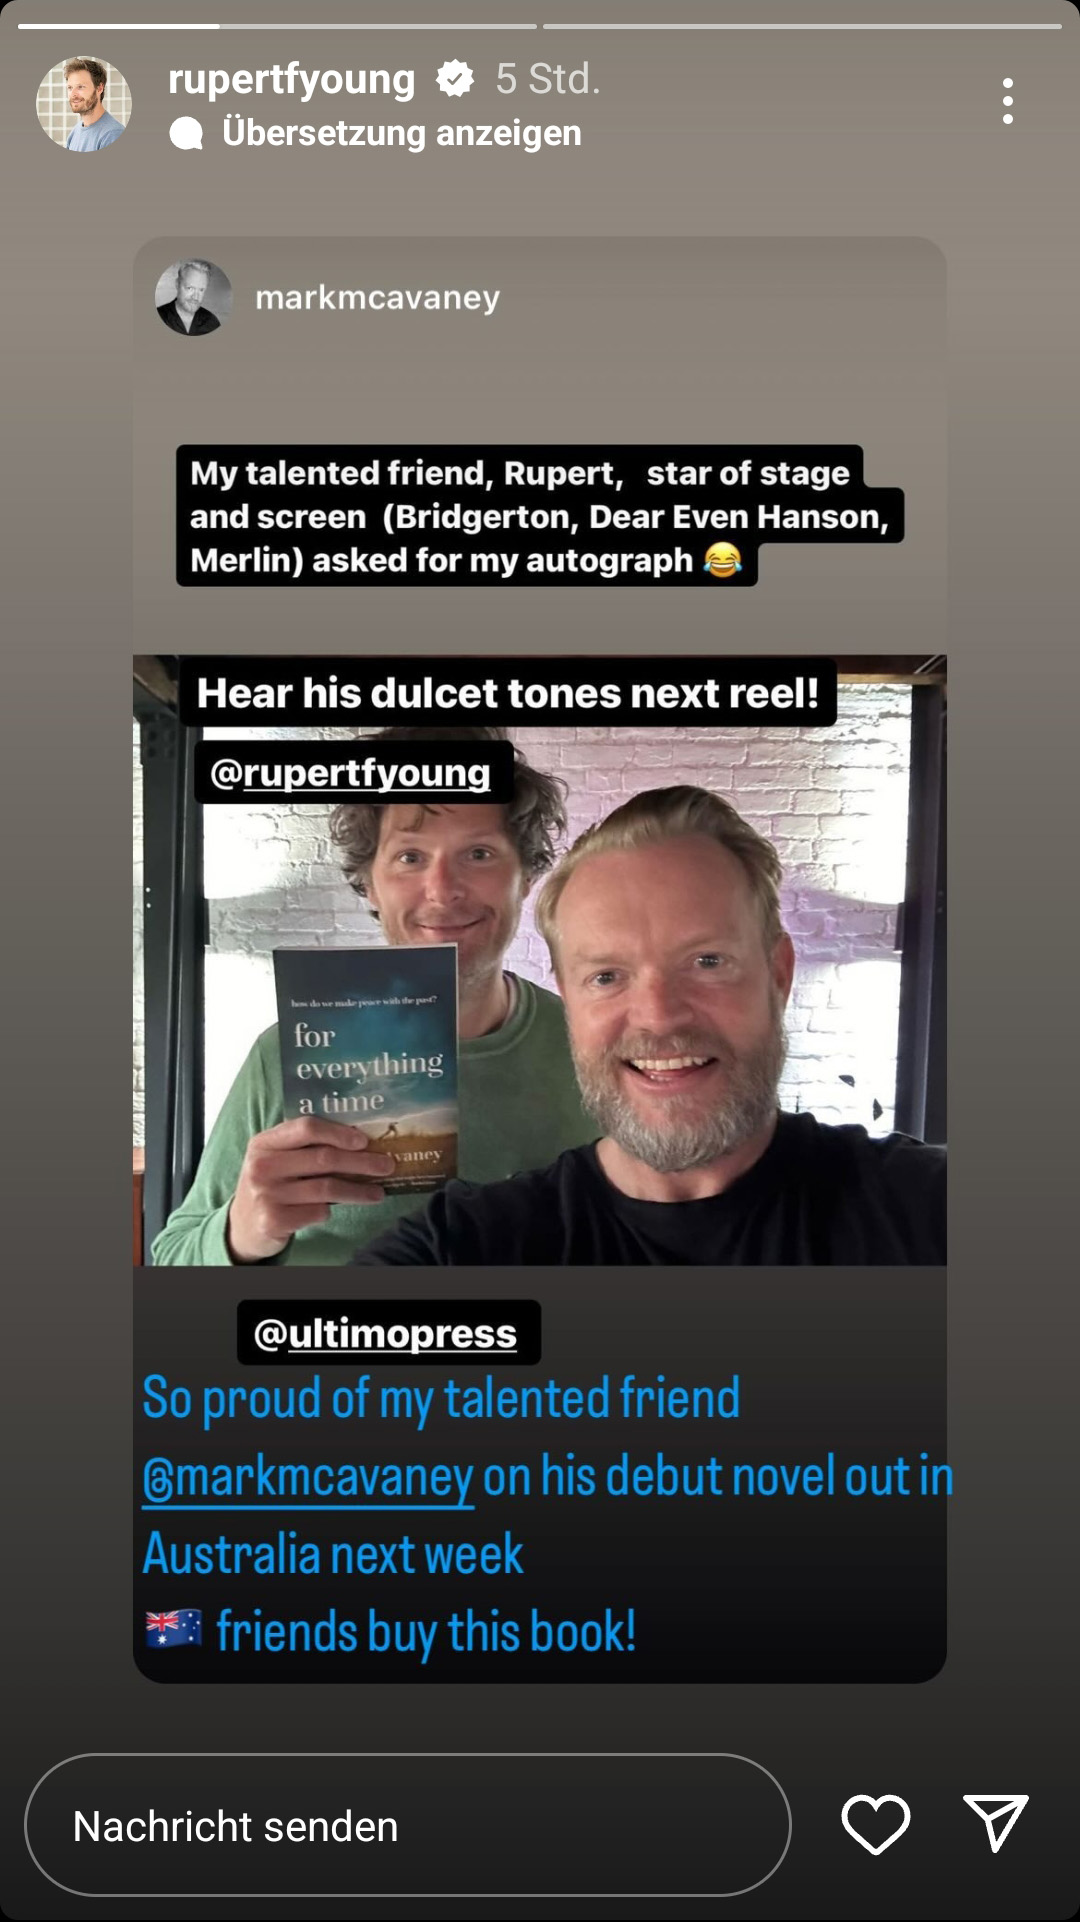 Book promo post on Instagram